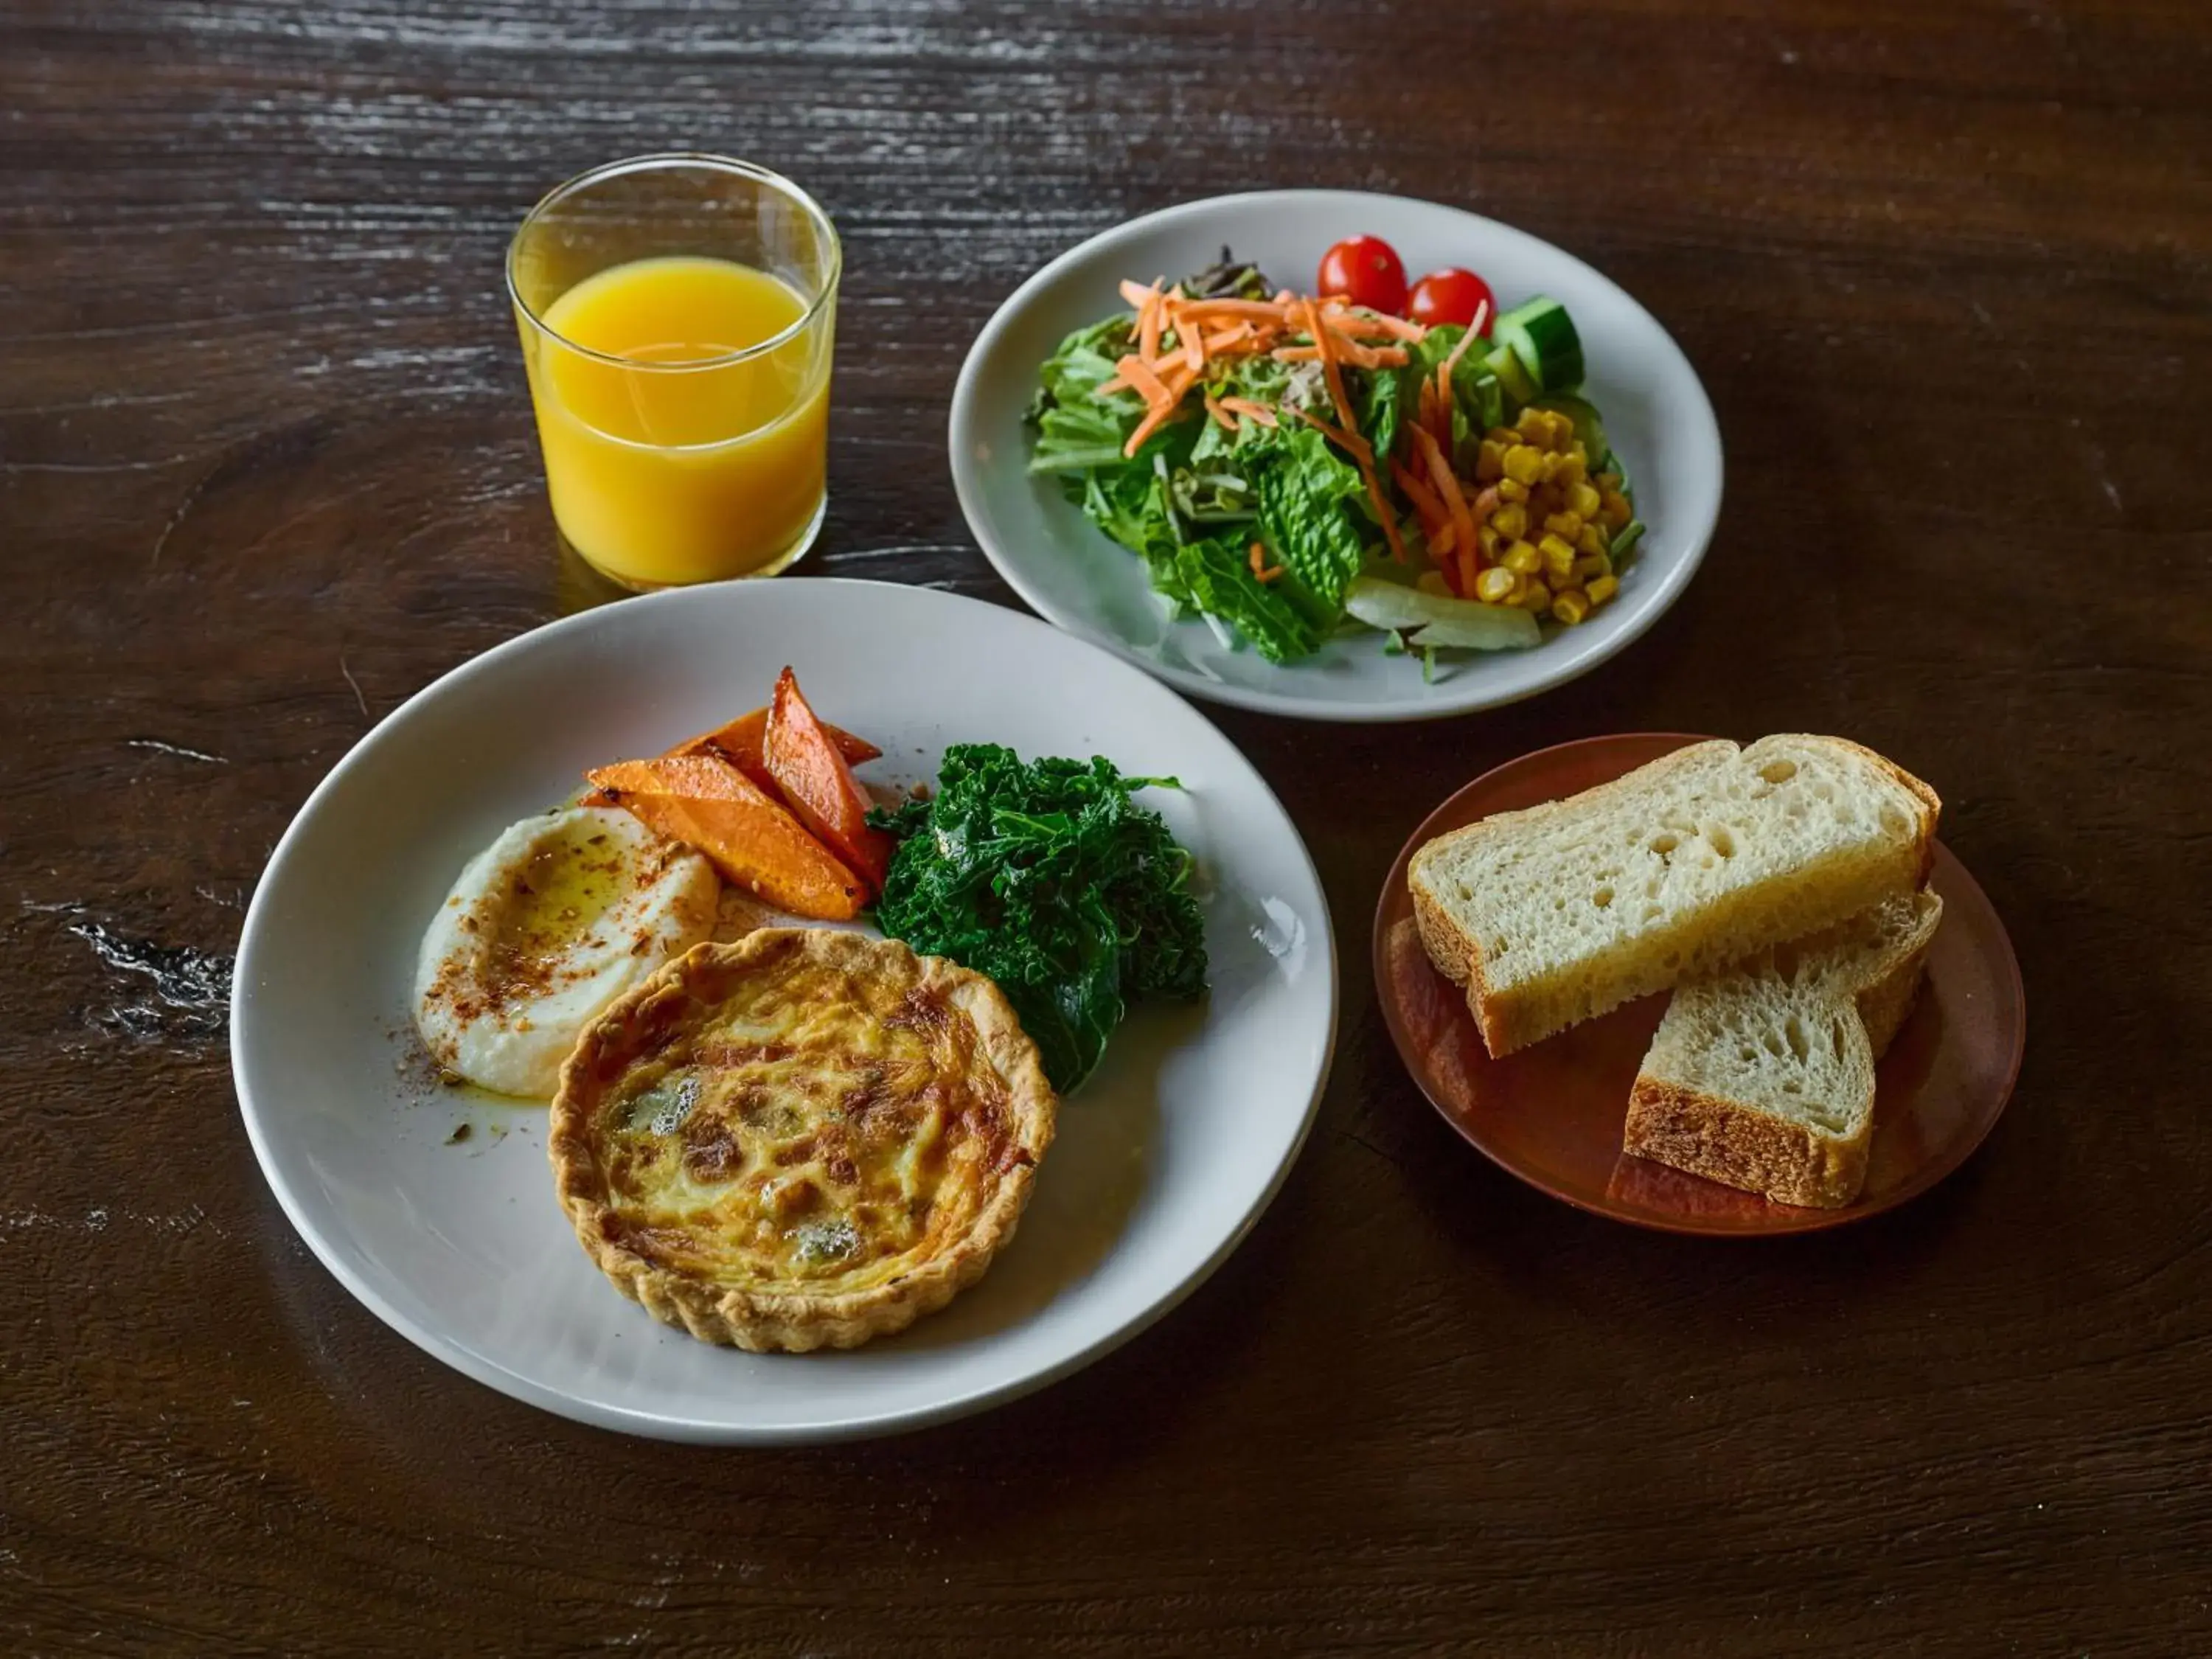 Food, Lunch and Dinner in sequence MIYASHITA PARK / SHIBUYA